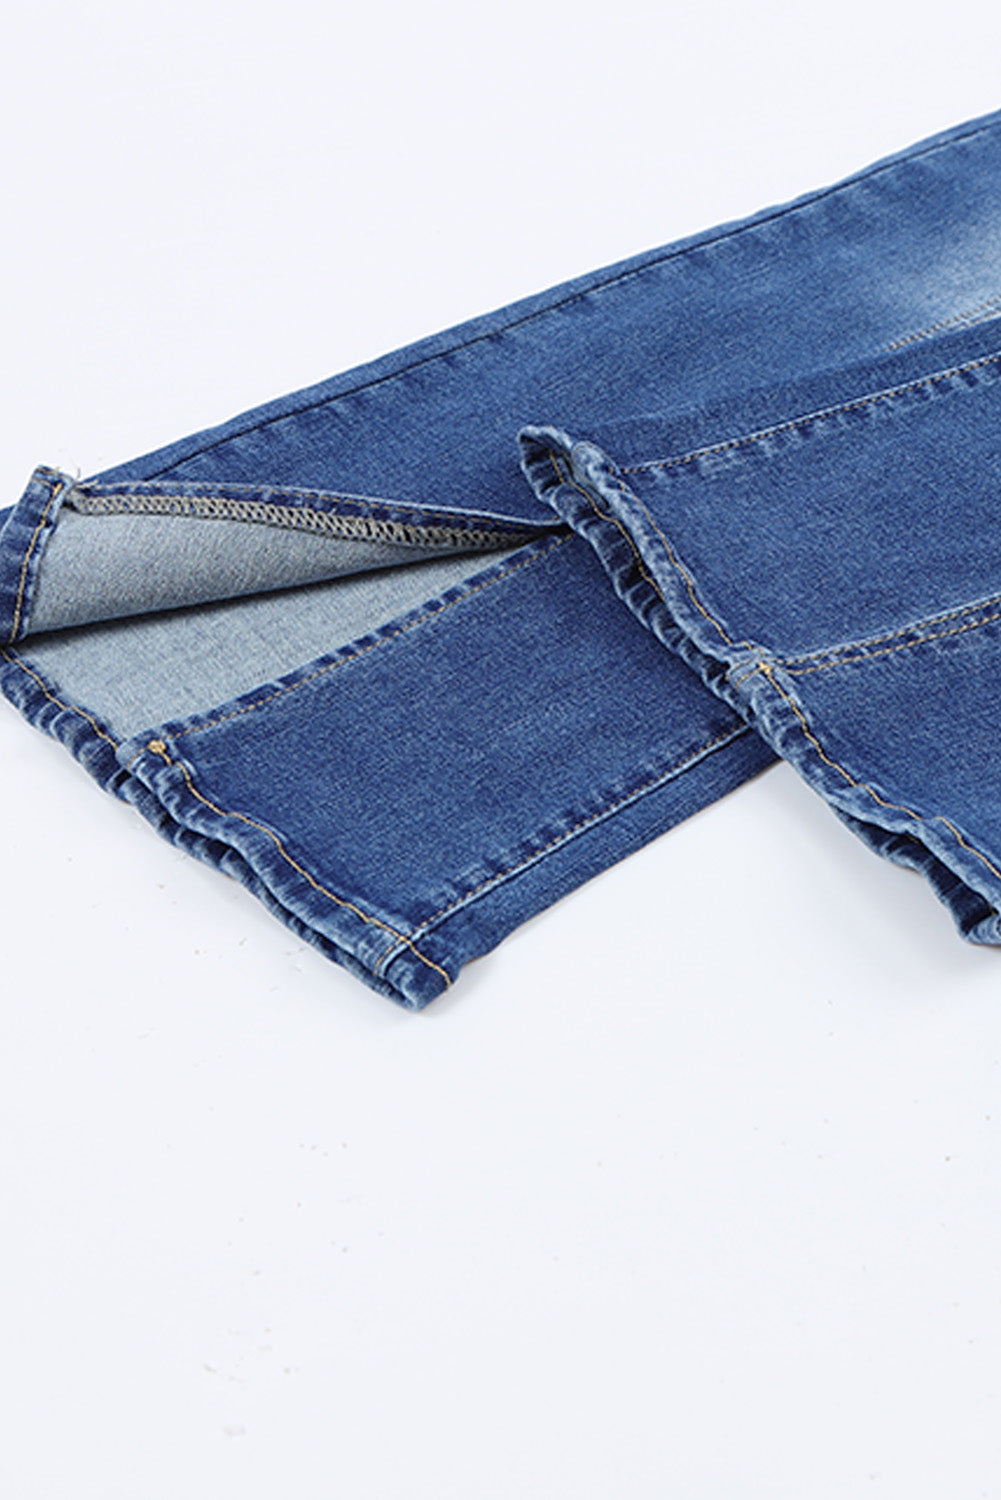 Blue Exposed Seam Split Flare Jeans Jeans JT's Designer Fashion